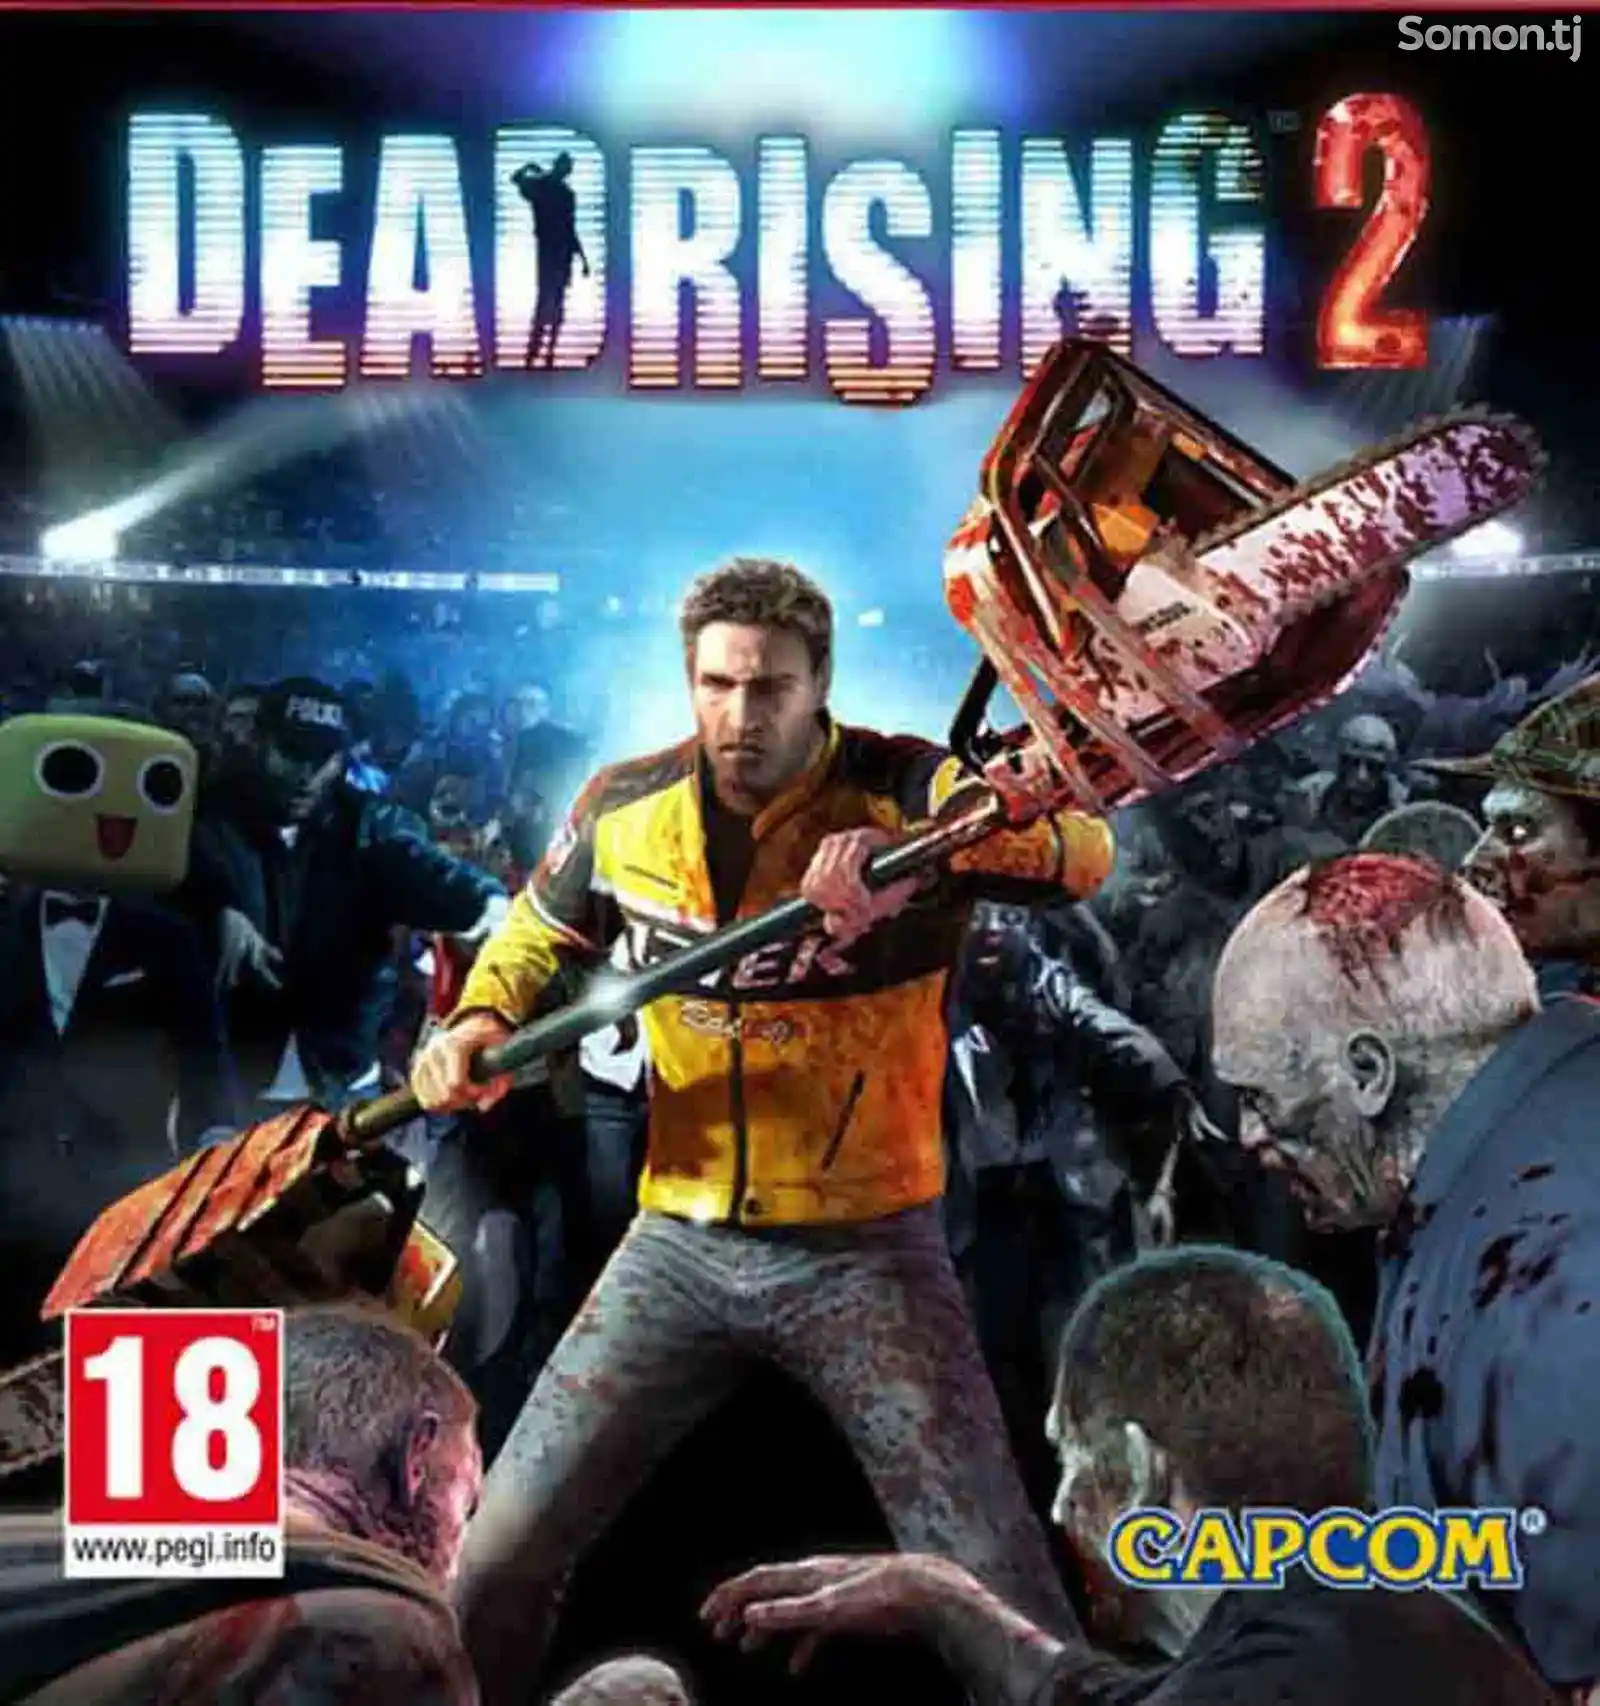 Игра Dead rising 2 для прошитых Xbox 360